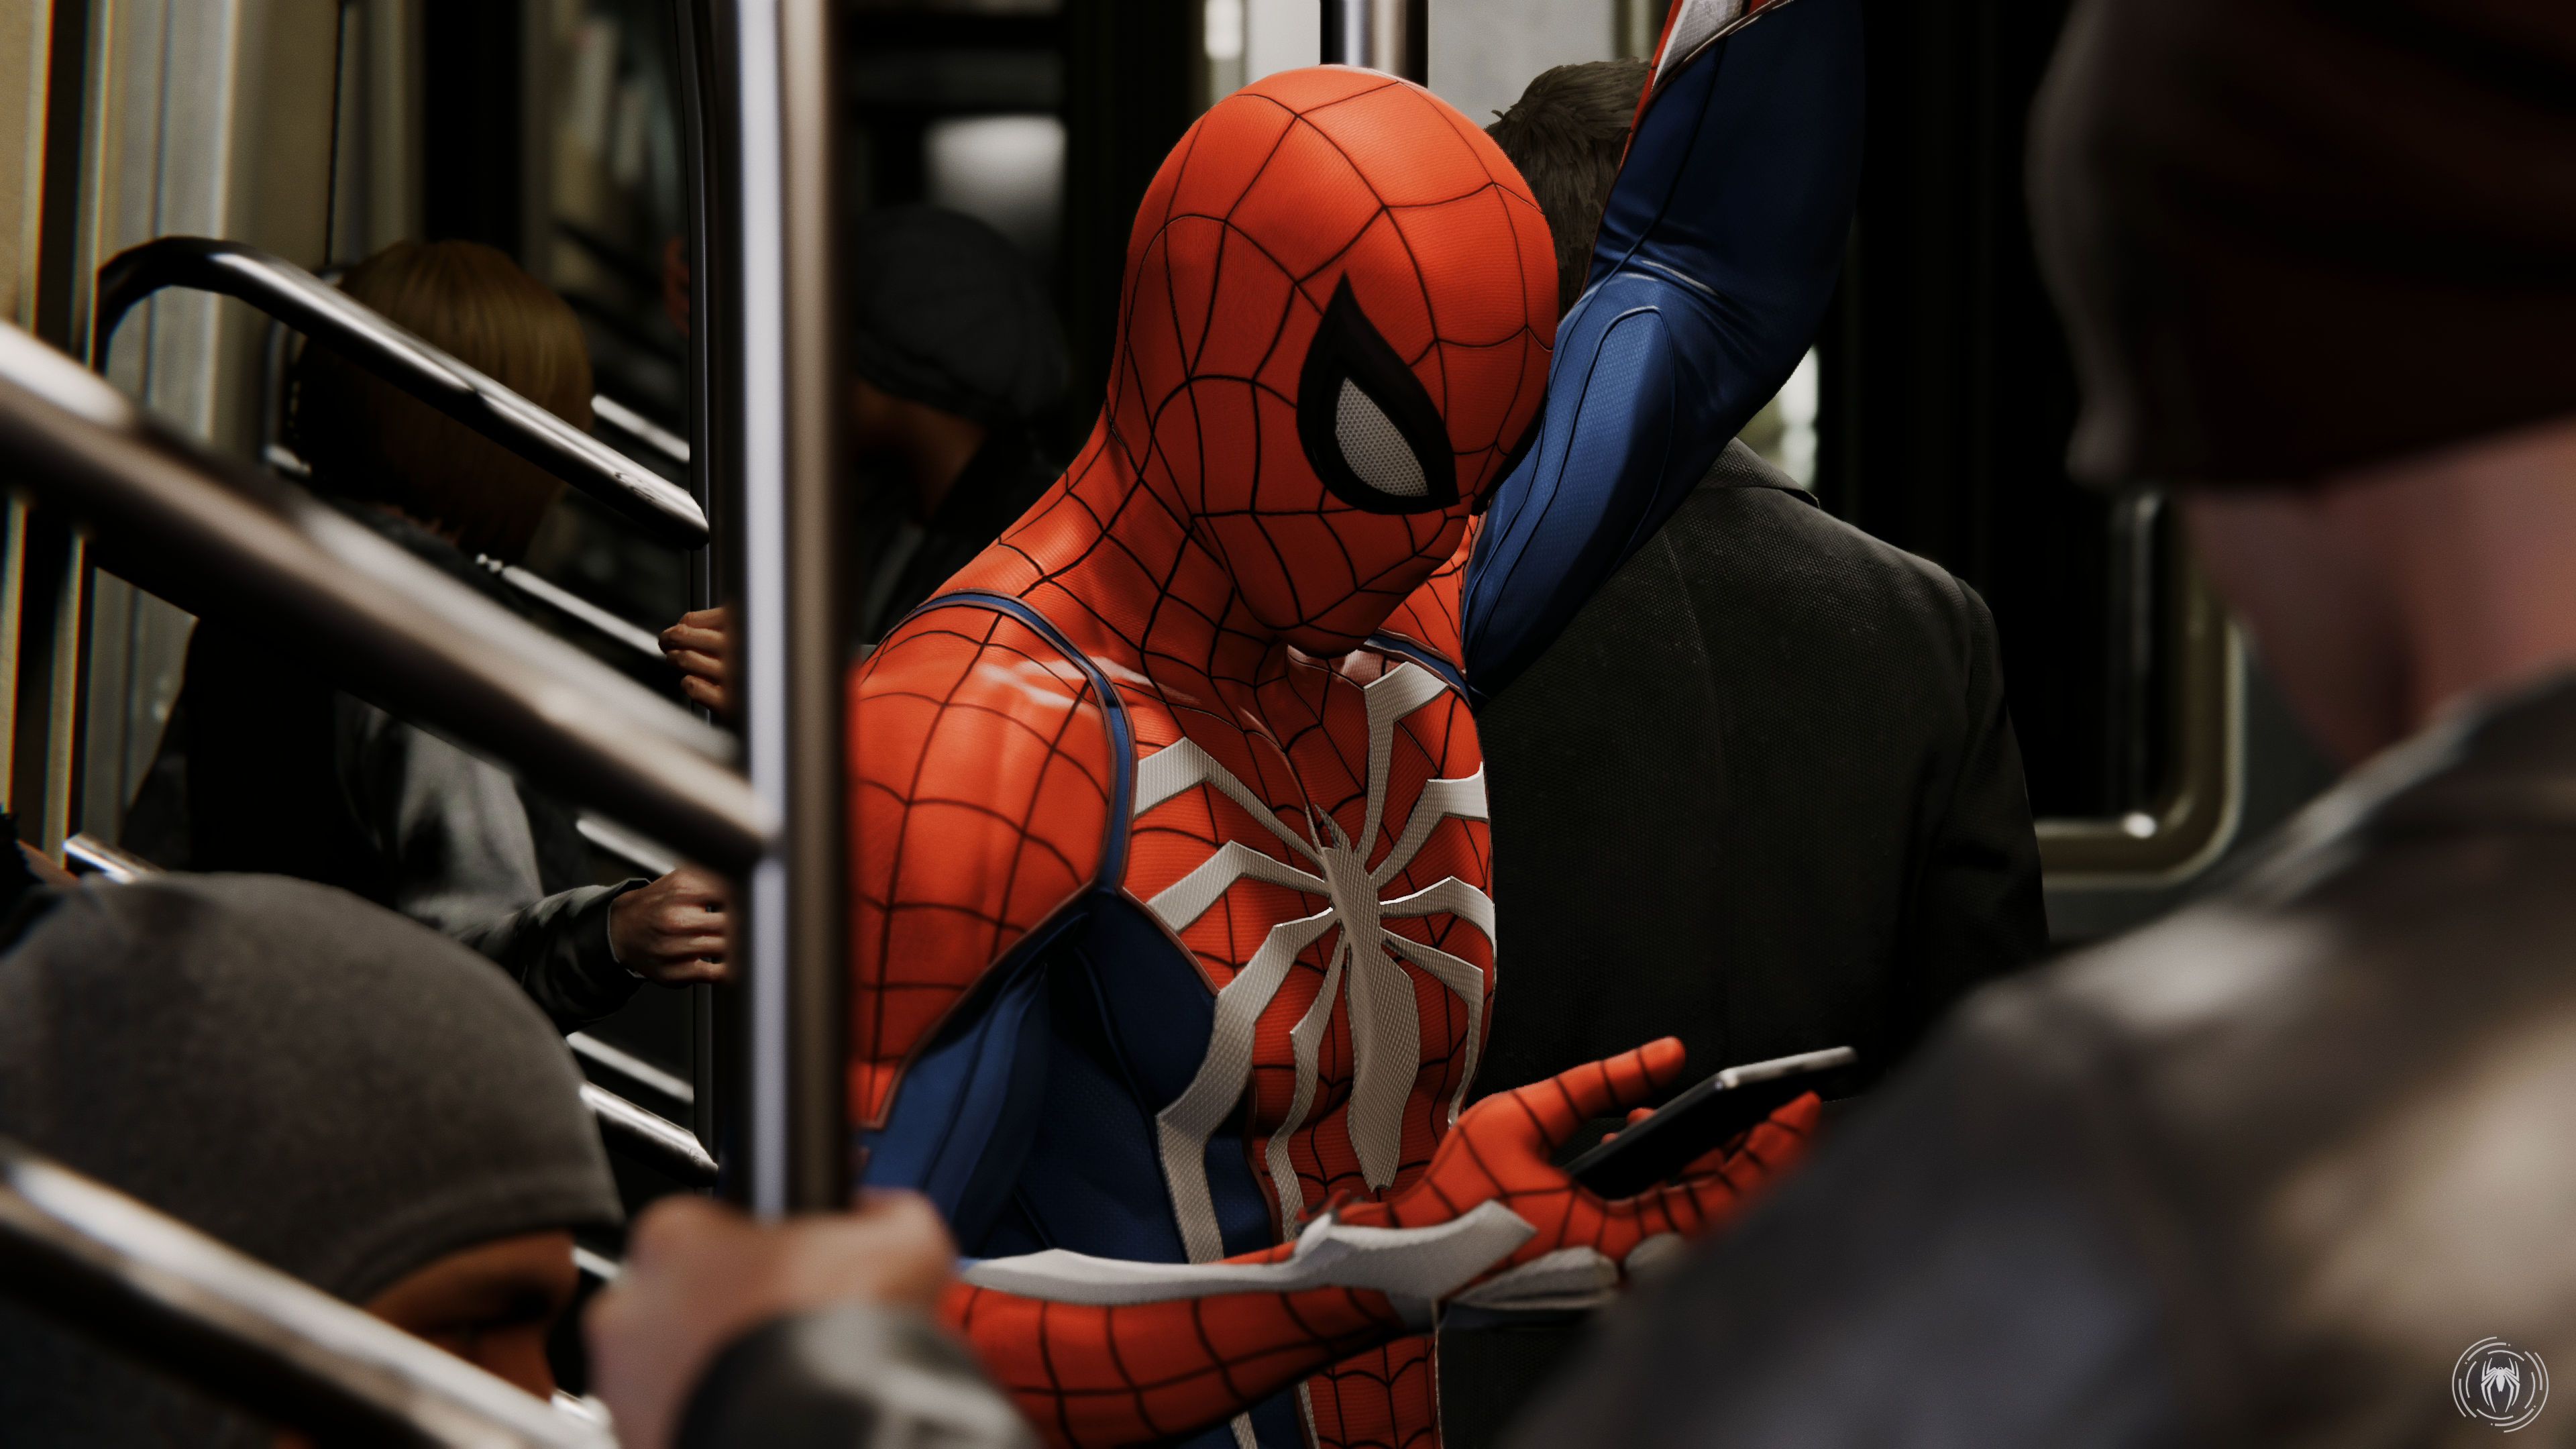 Spider-Man on the subway.